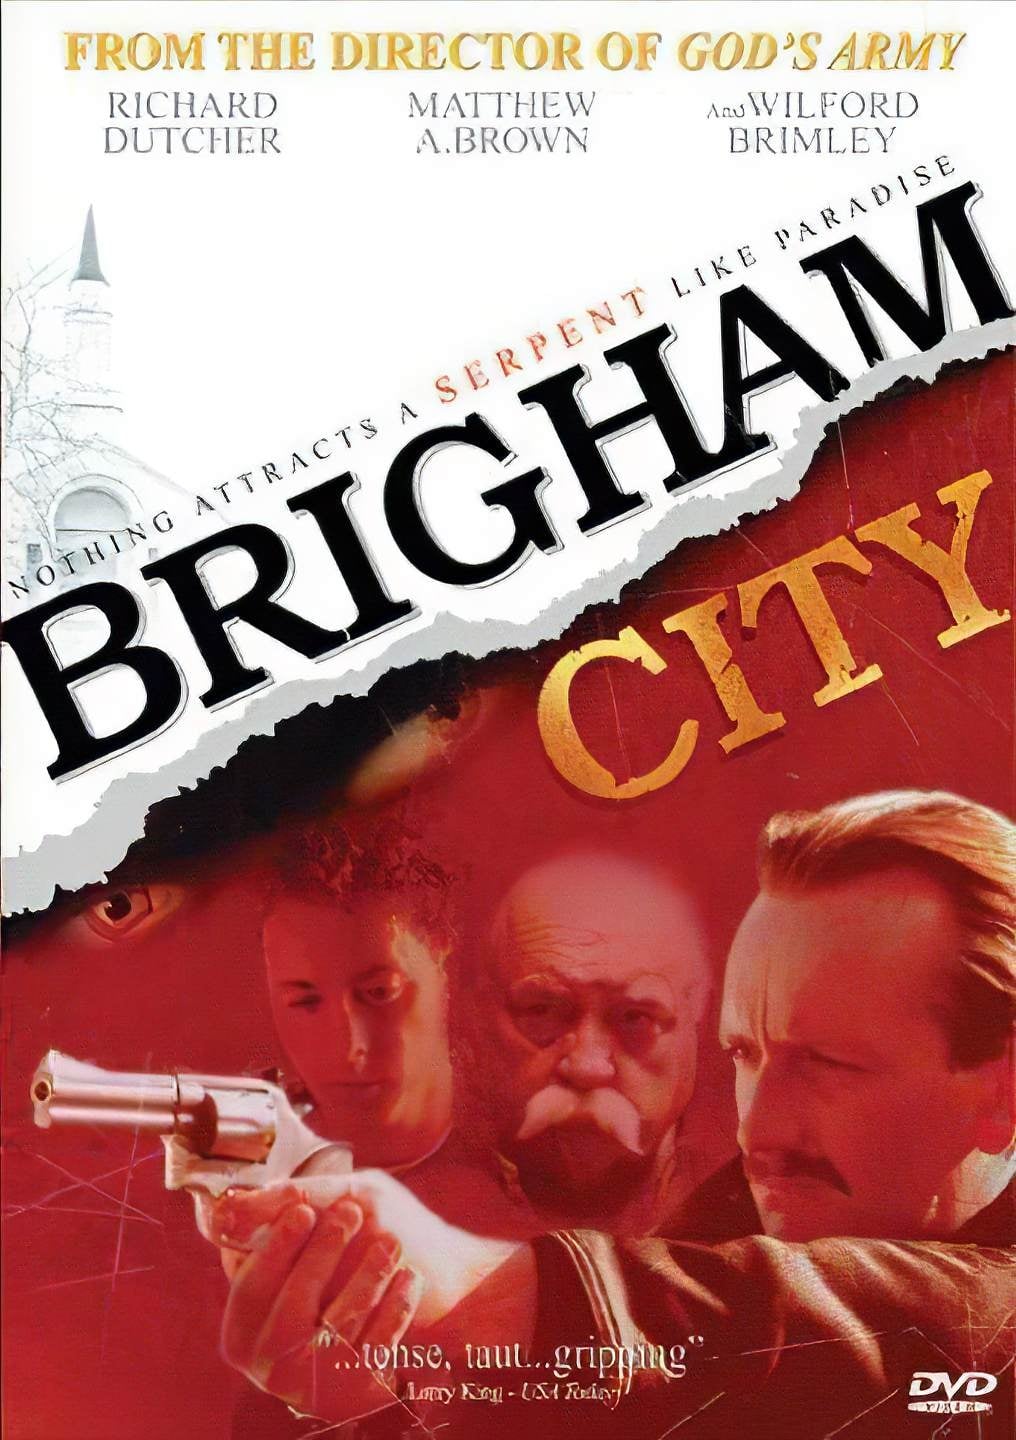 Brigham City